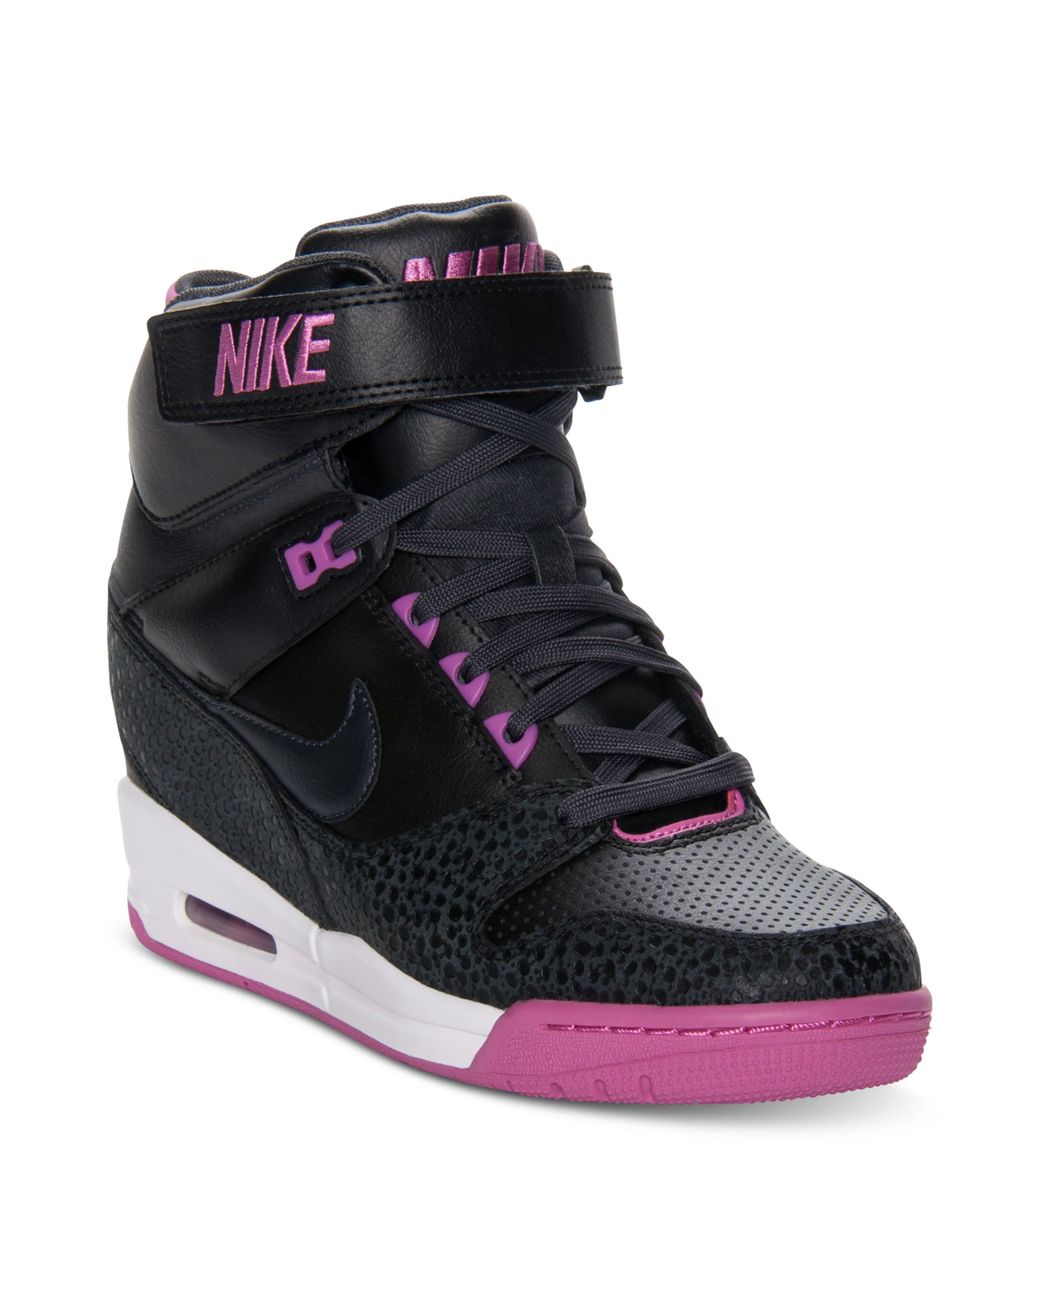 Nike Air Revolution Sky Hi Casual Wedge Sneakers in Black/Anthracite  (Black) | Lyst